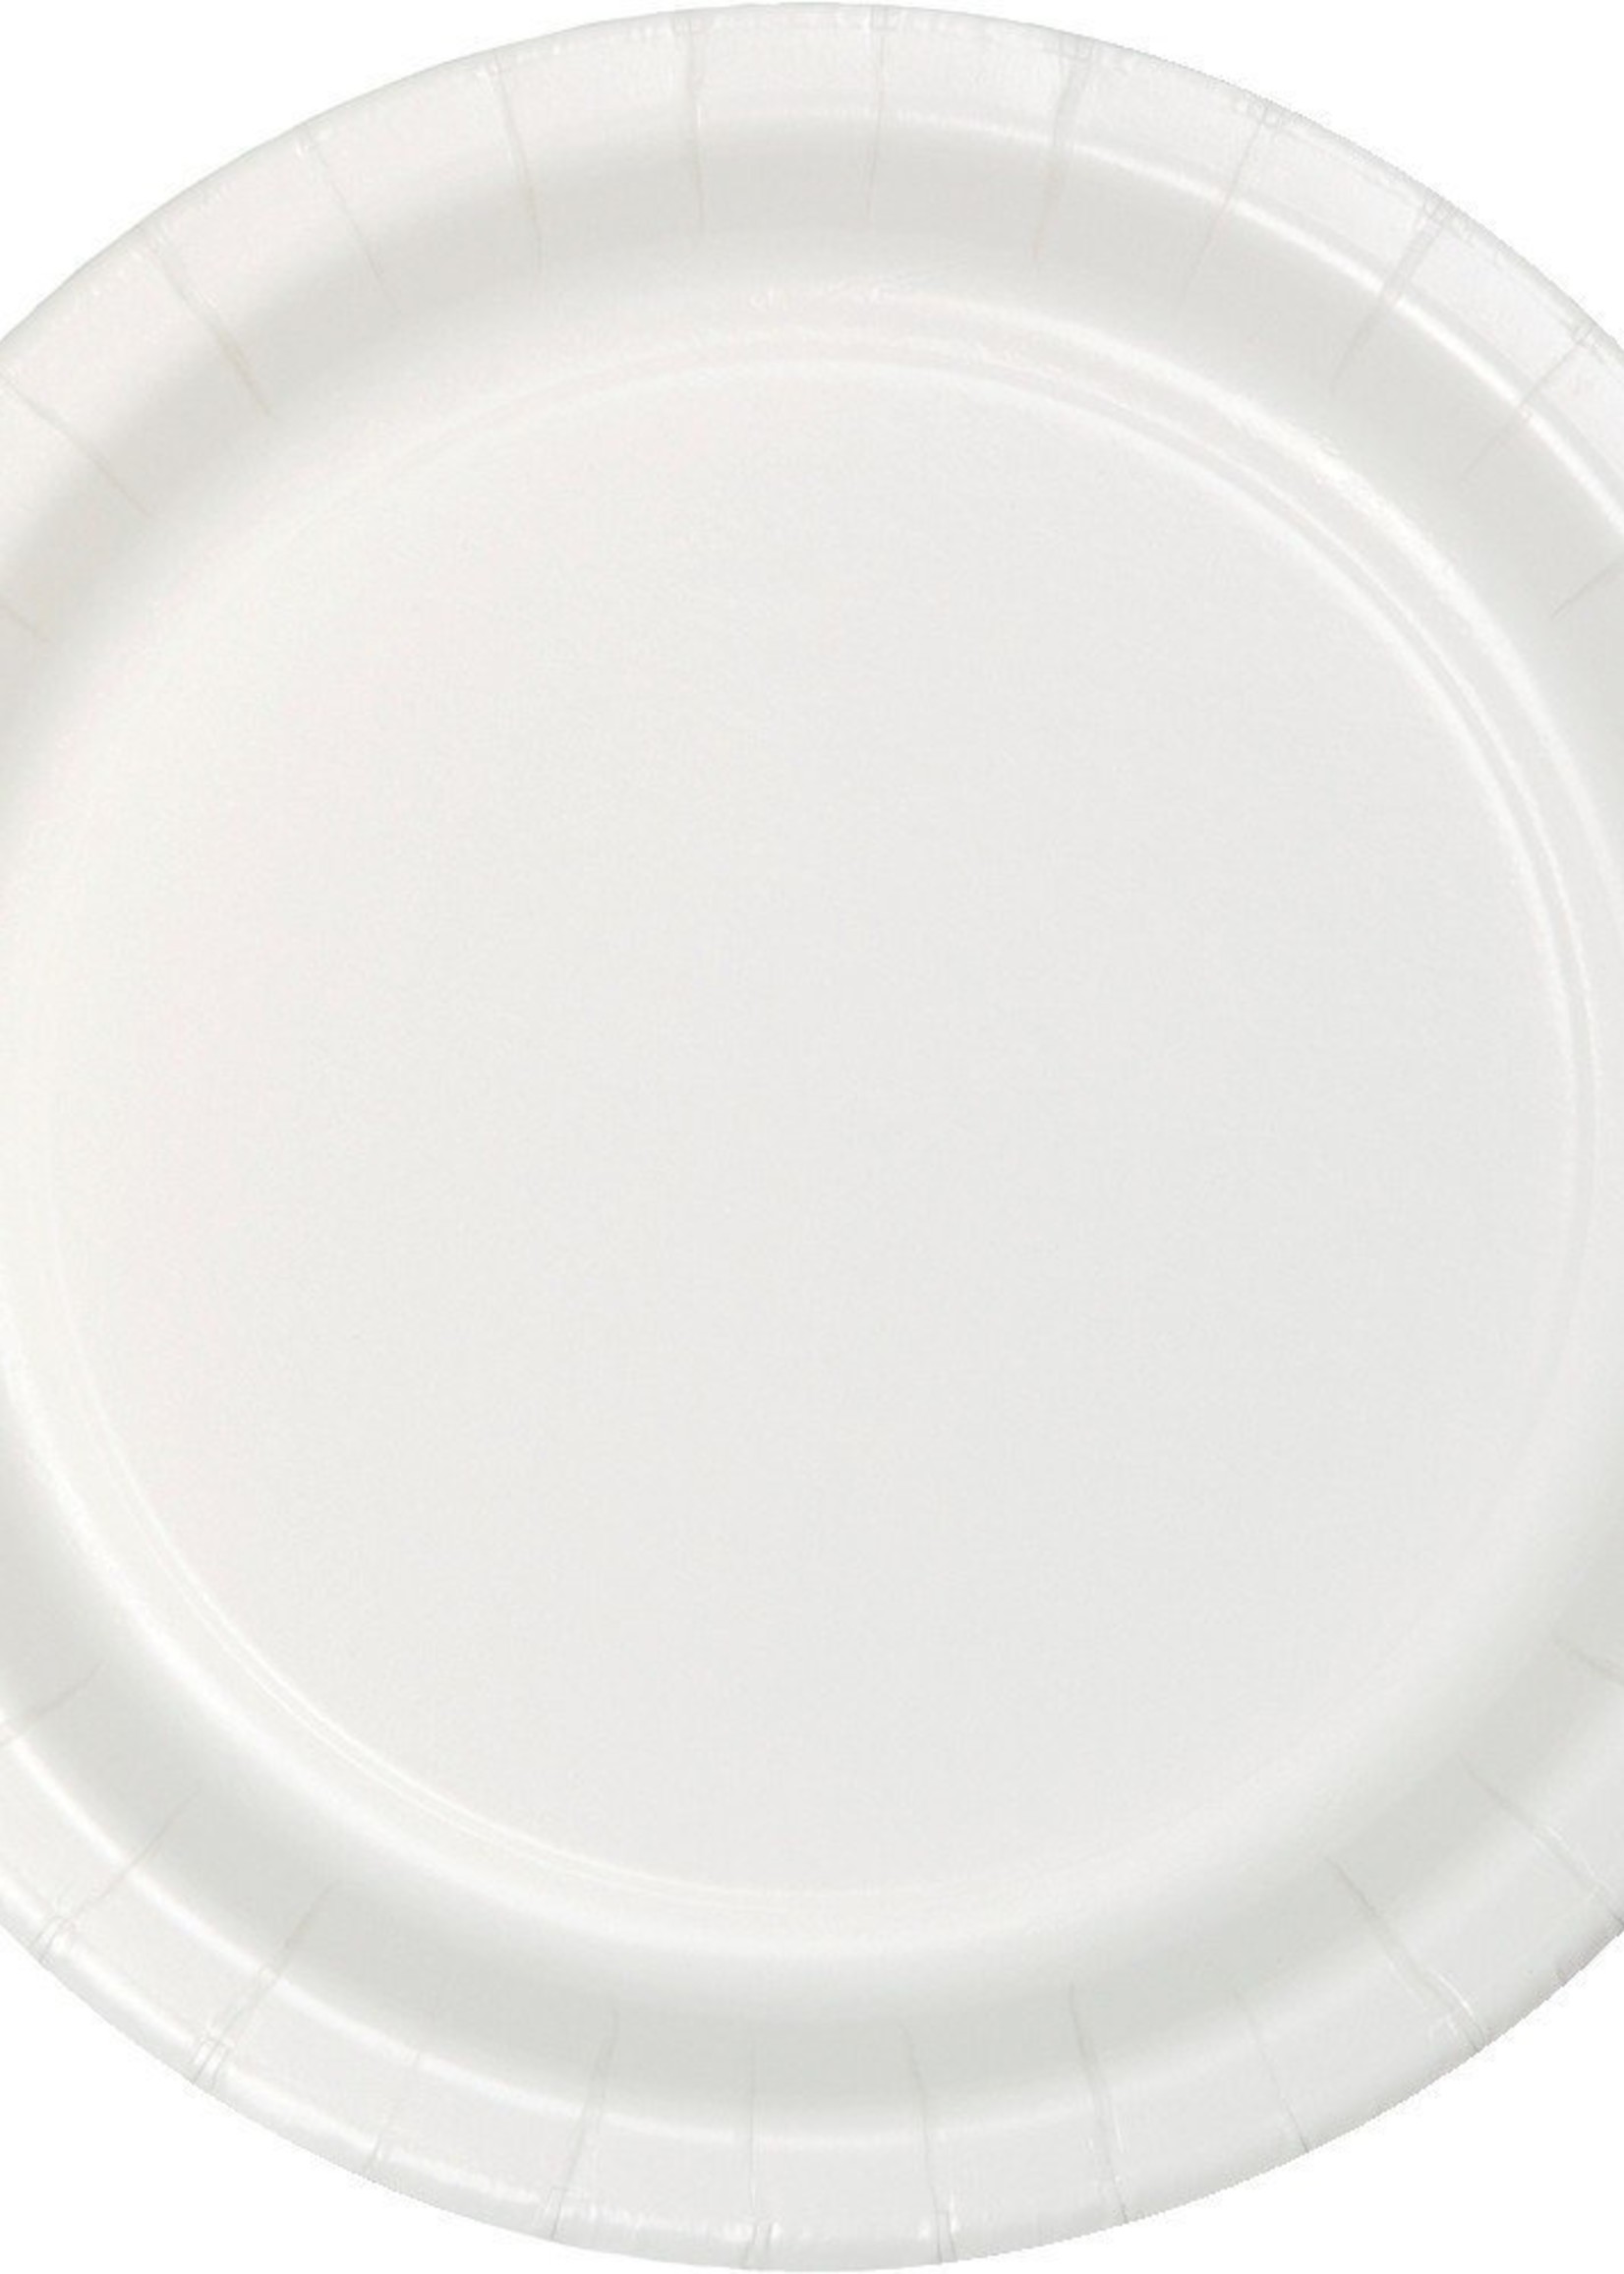 WHITE DESSERT PLATE 24CT